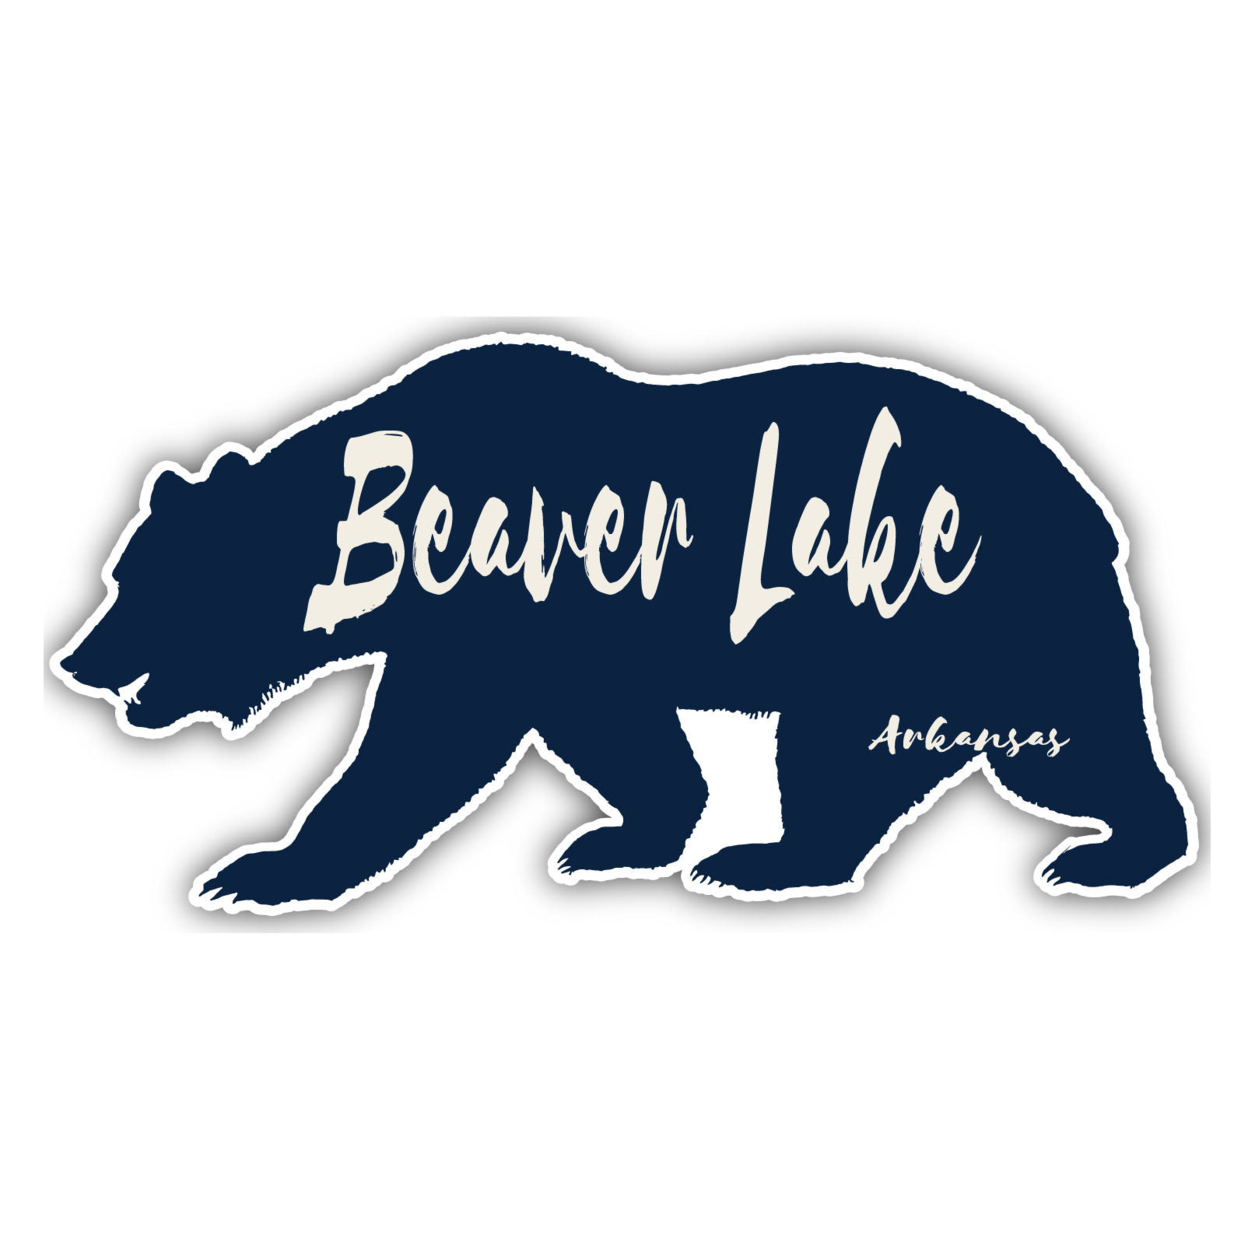 Beaver Lake Arkansas Souvenir Decorative Stickers (Choose Theme And Size) - 4-Pack, 12-Inch, Bear